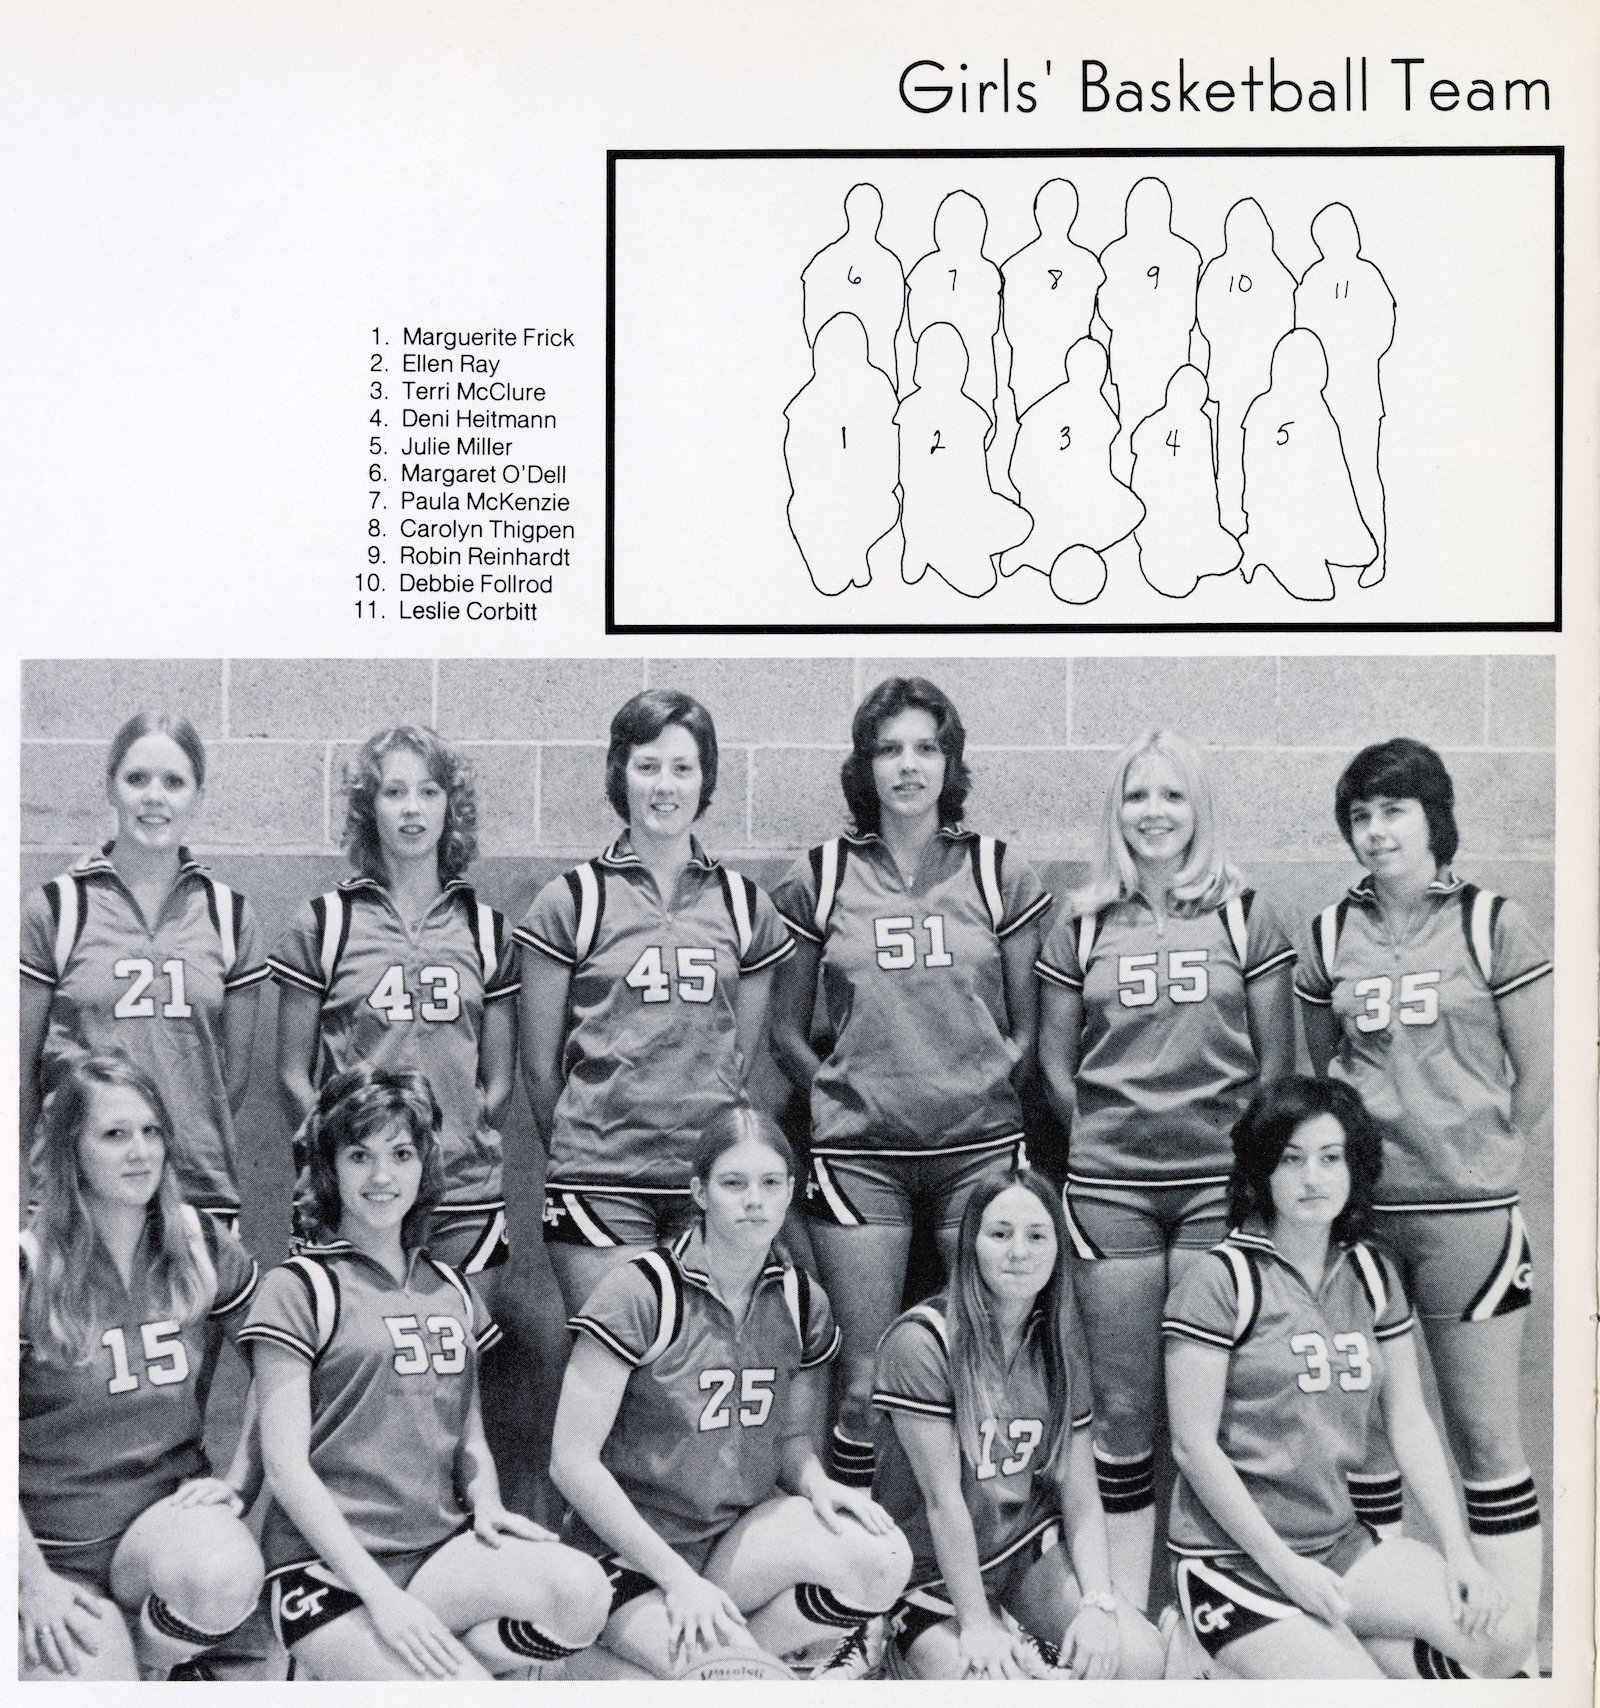 Photo of Georgia Tech's first women's basketball team (from The Blueprint, 1975)